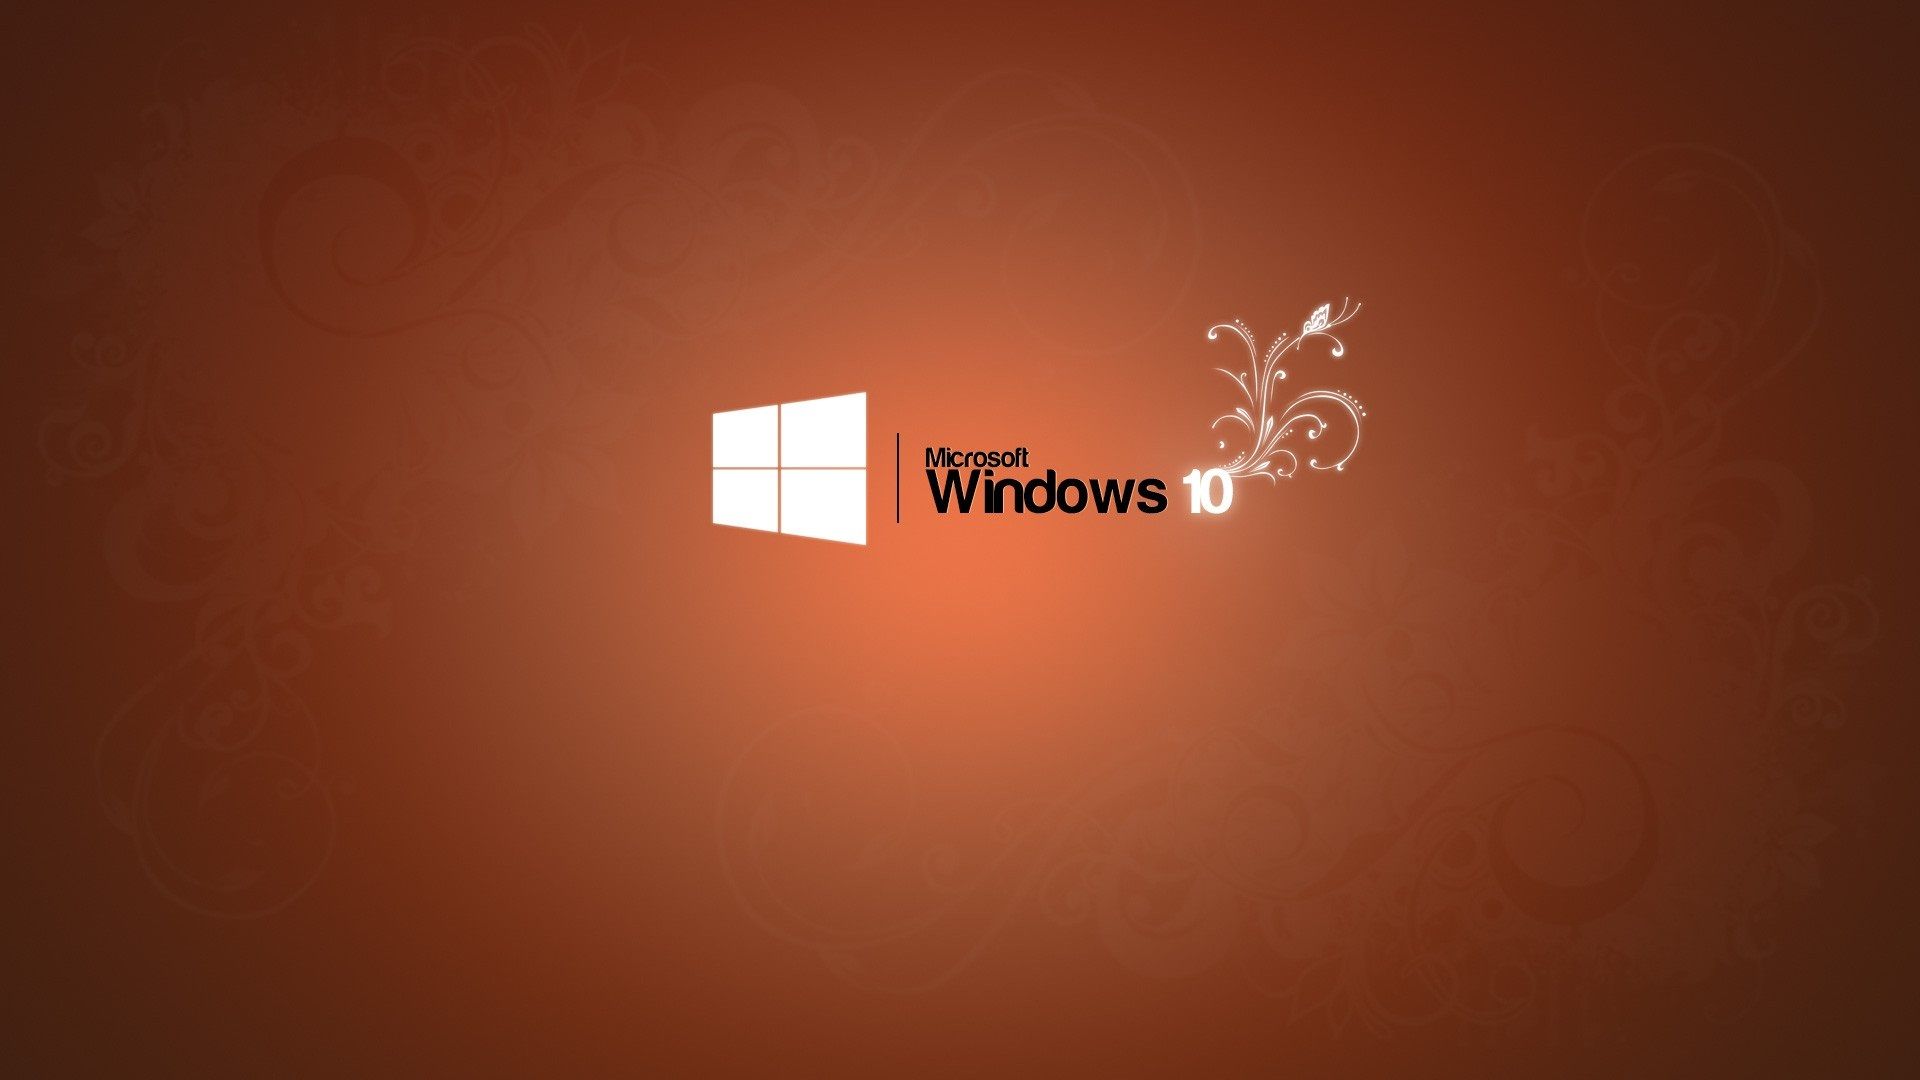 Wallpaper Microsoft Windows 10 logo, orange background 1920x1080 Full HD 2K Picture, Image